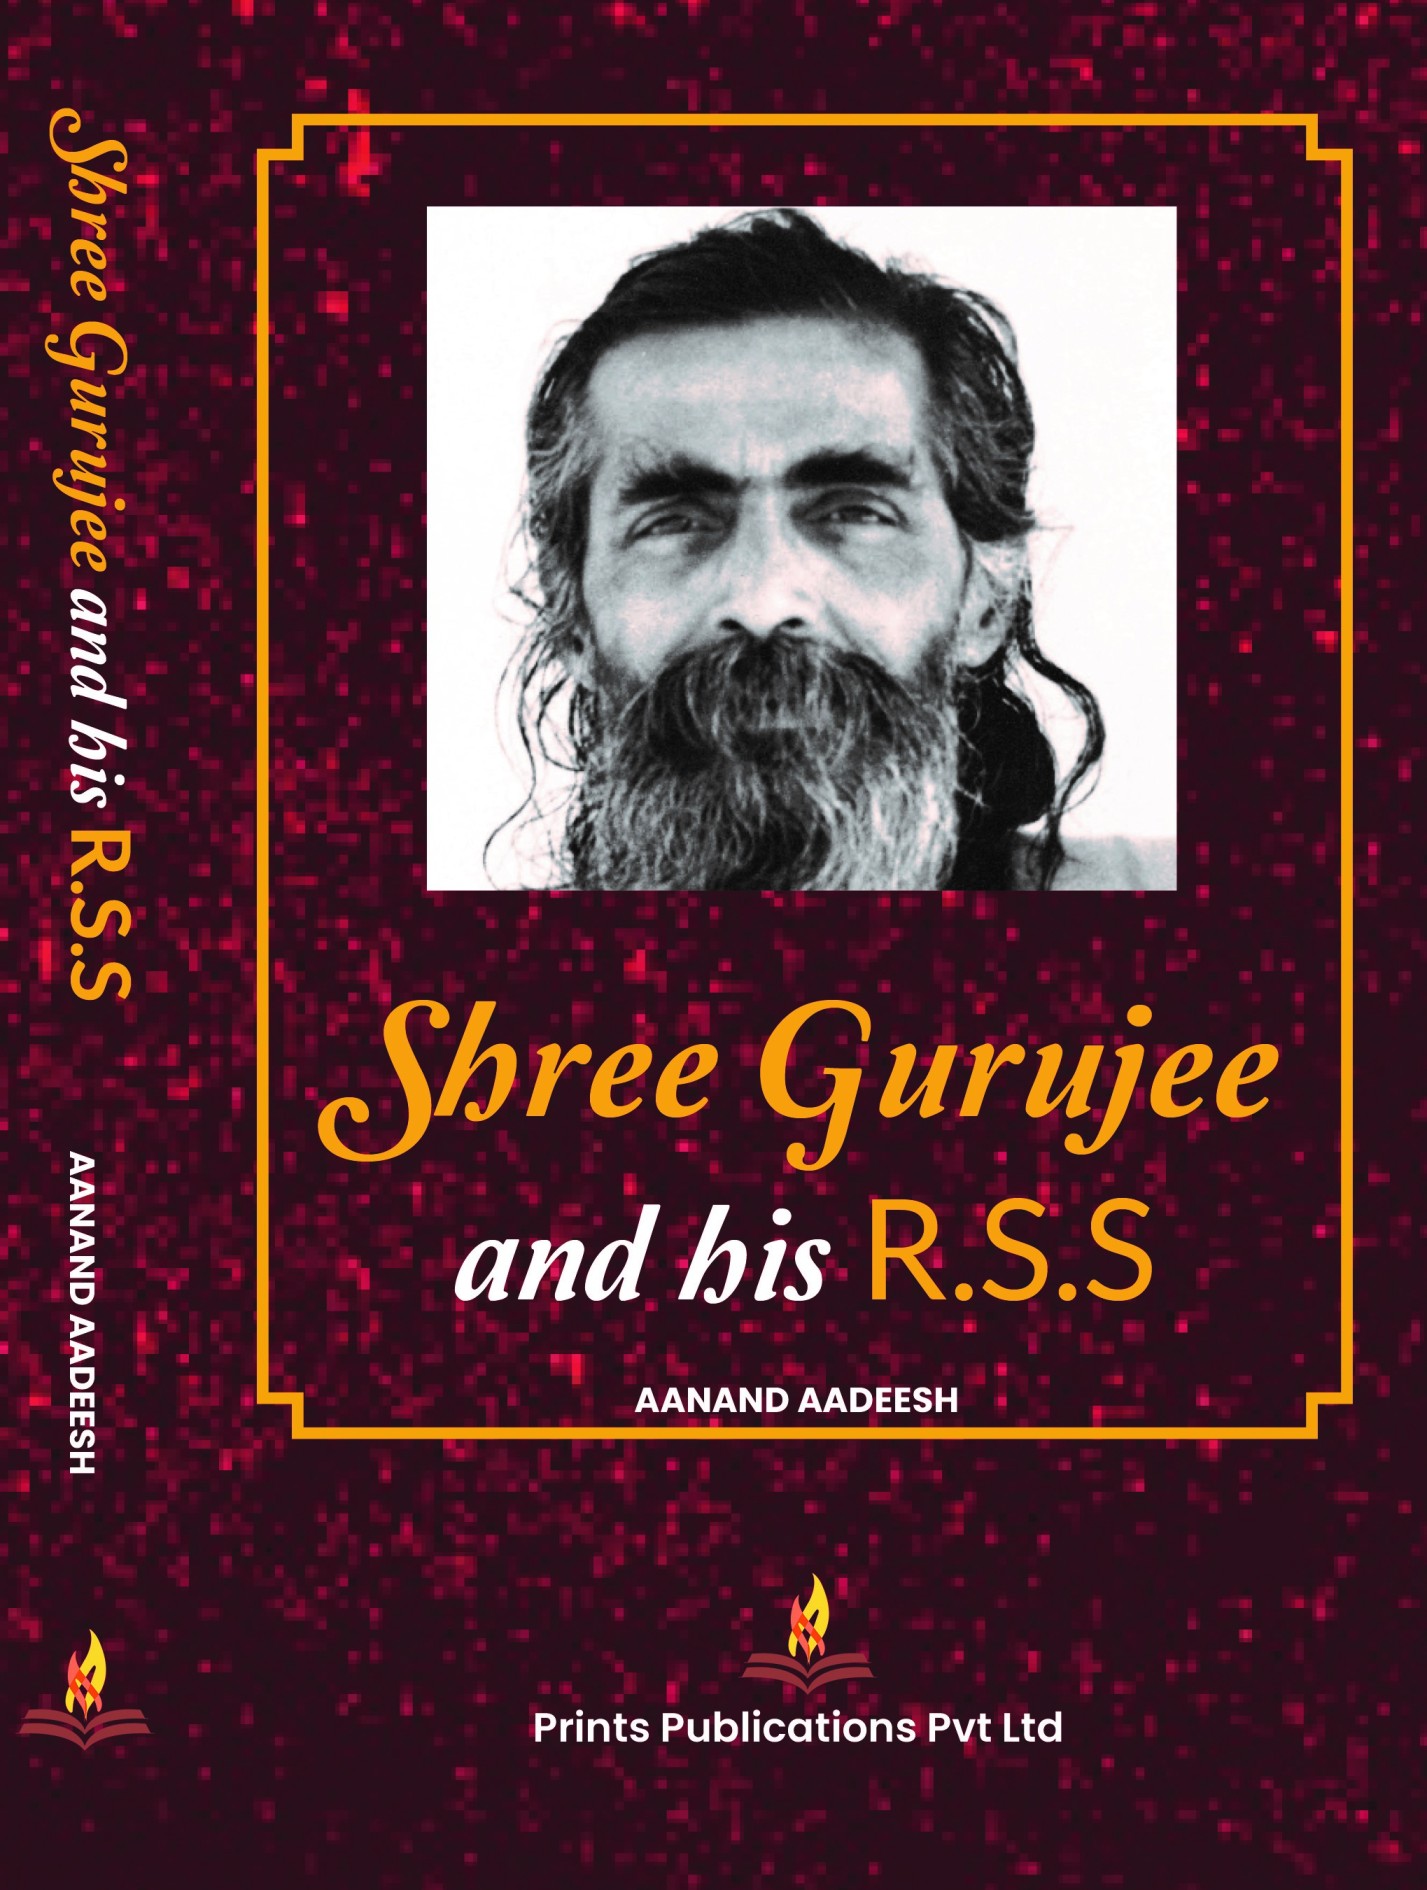 SHREE GURUJEE AND HIS R.S.S 